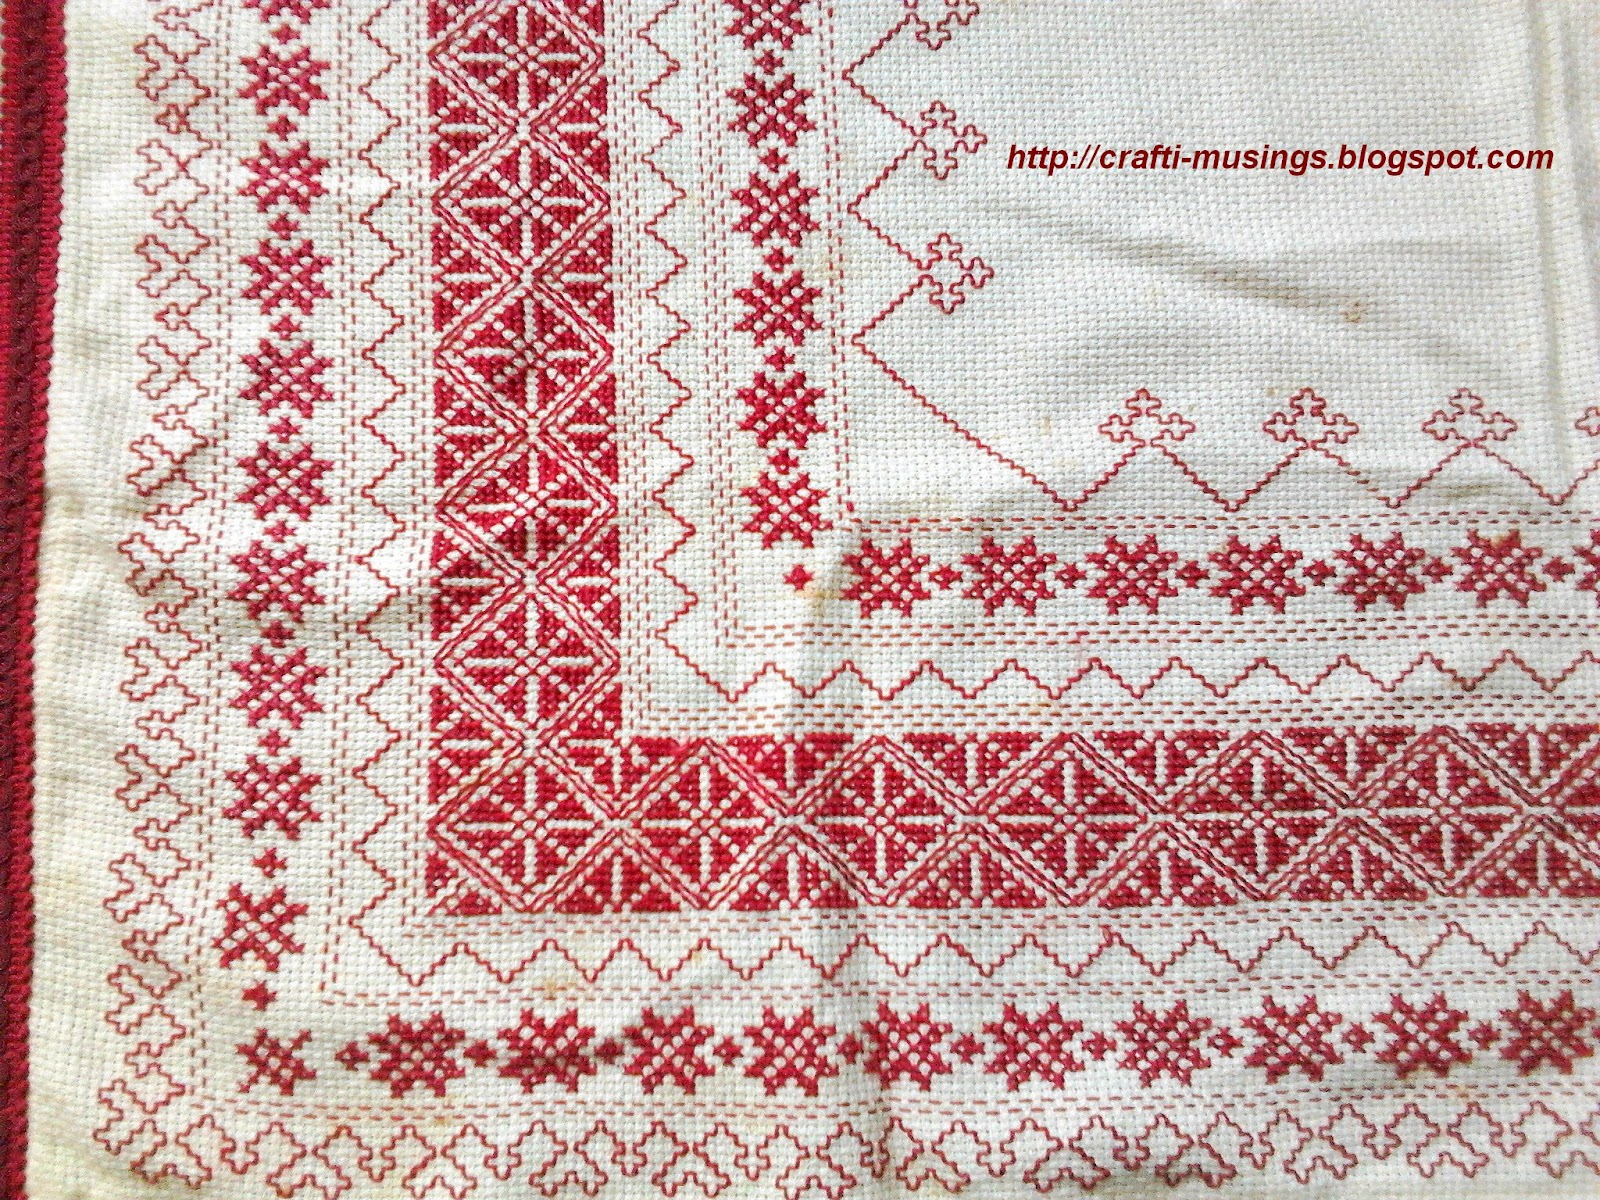 Norwegian Embroidery Patterns Crafti Musings Cross Stitch Norwegian Motif My Best One Yet